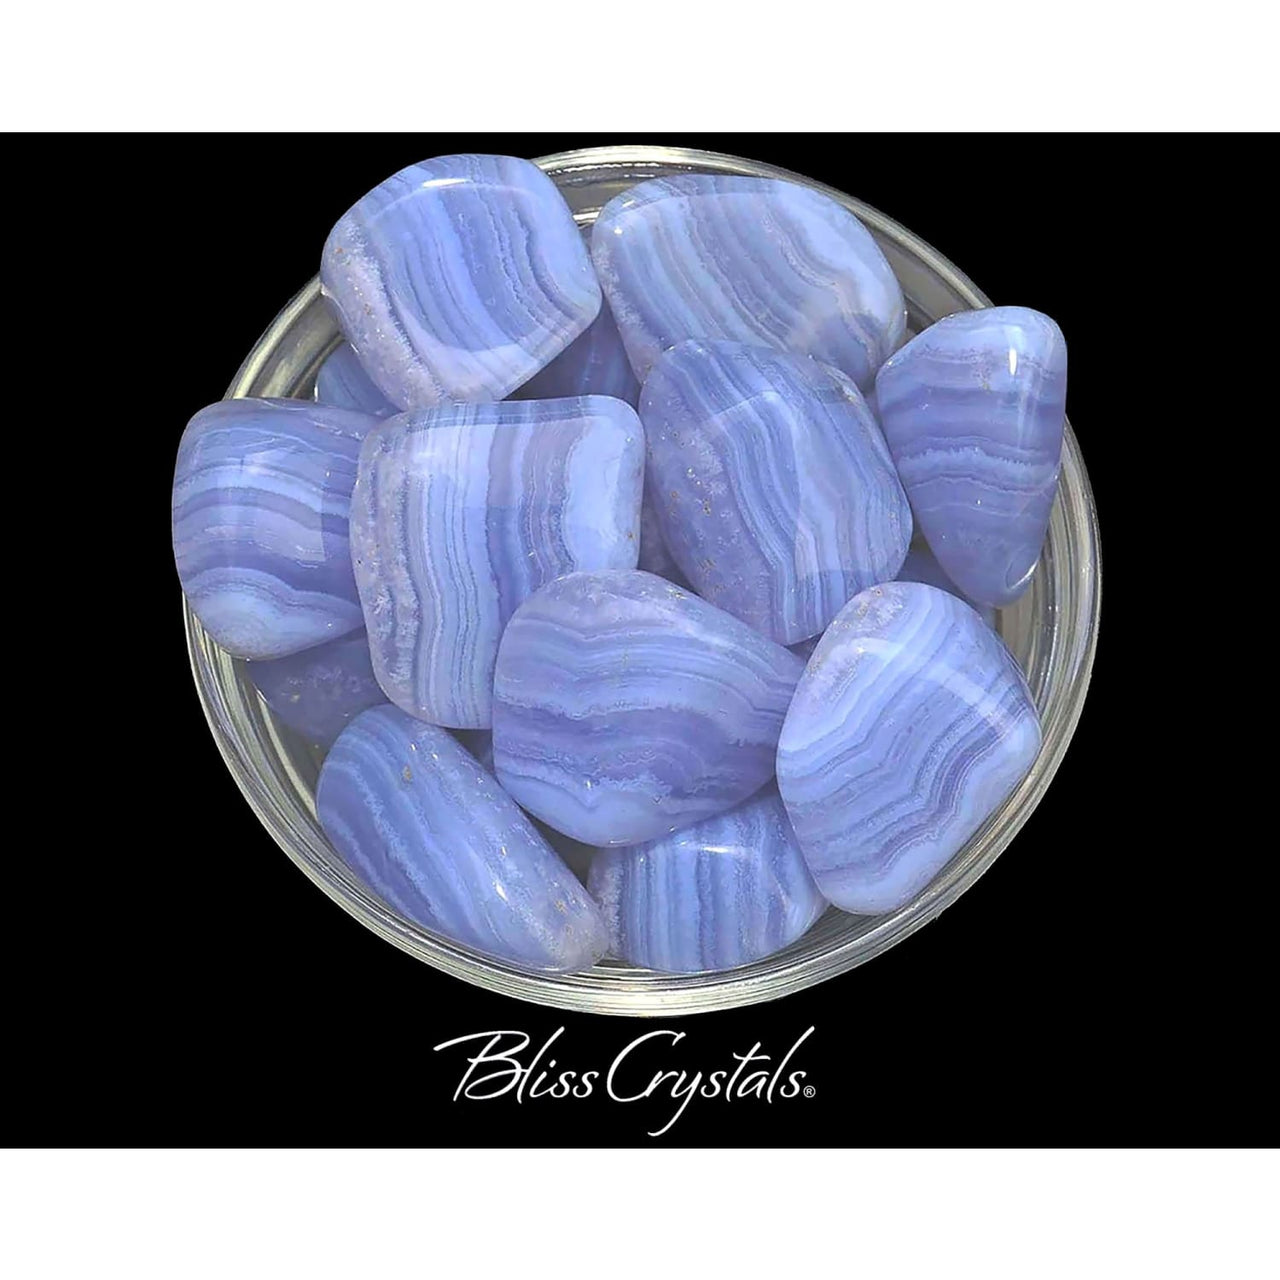 1 Blue Lace Agate Tumbled Stone (3 Sizes - L XL Jumbo) for 